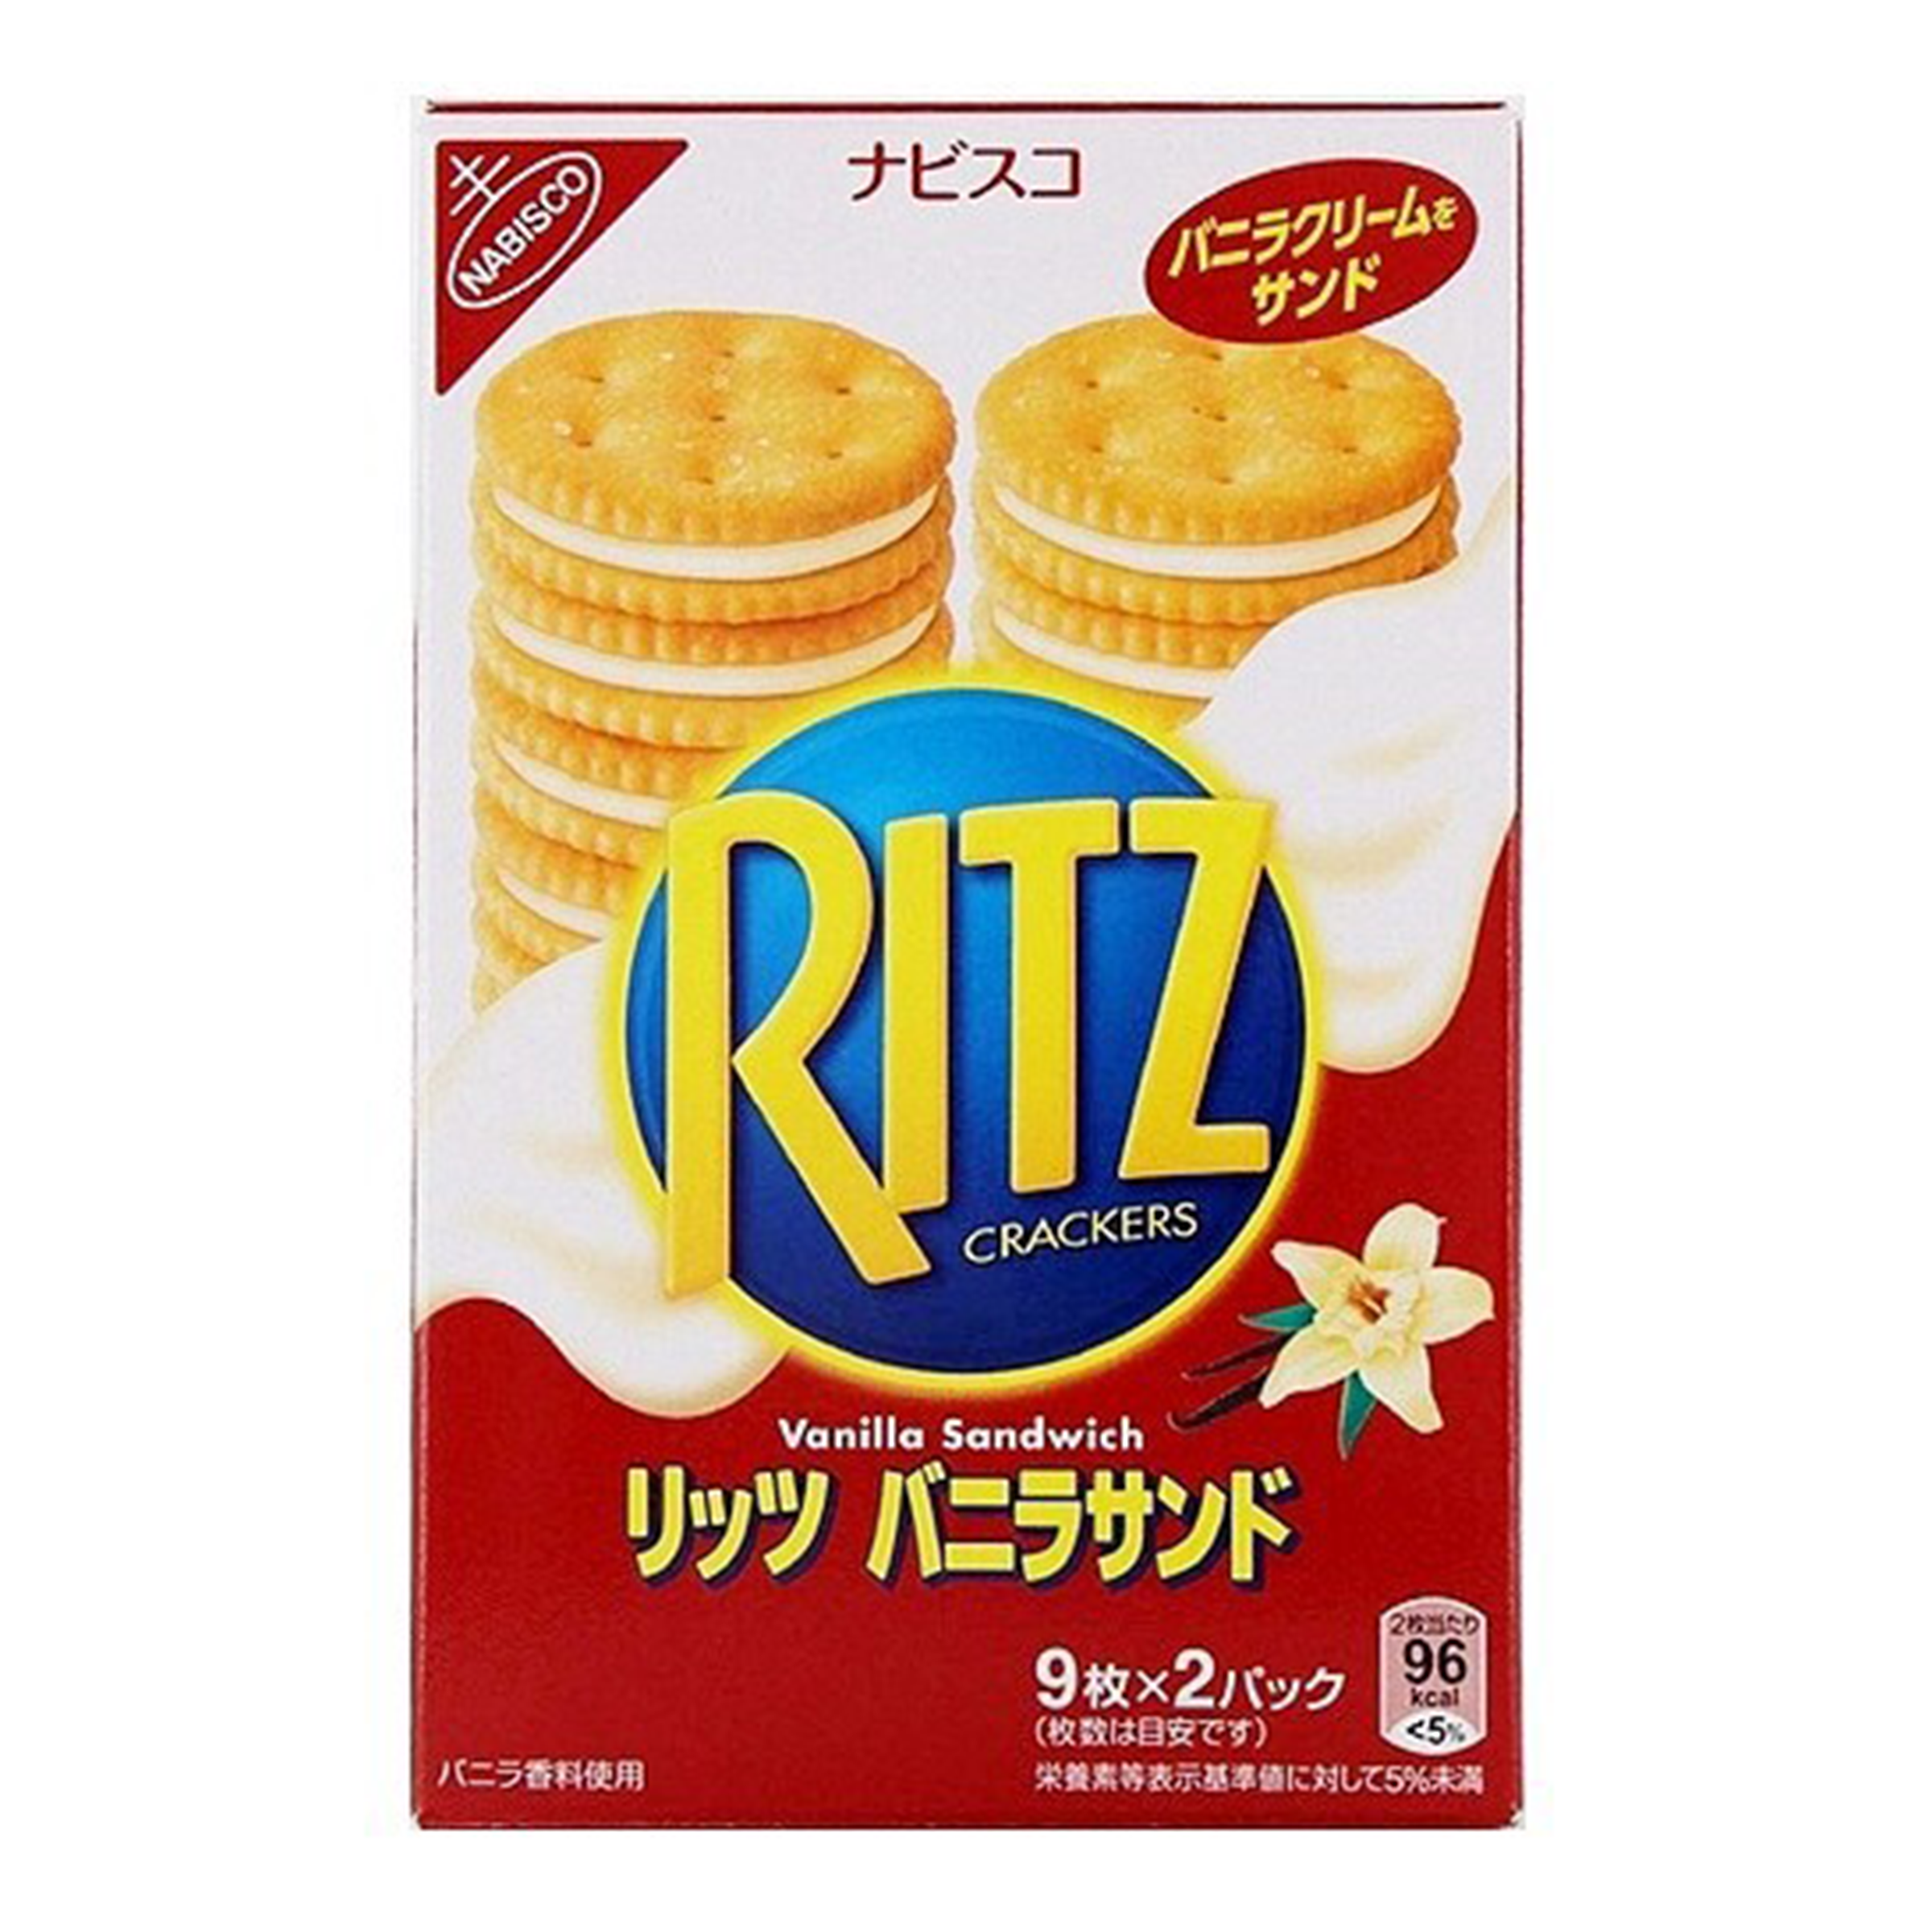 Ritz Cracker - Vanilla Sandwiches (Japan)